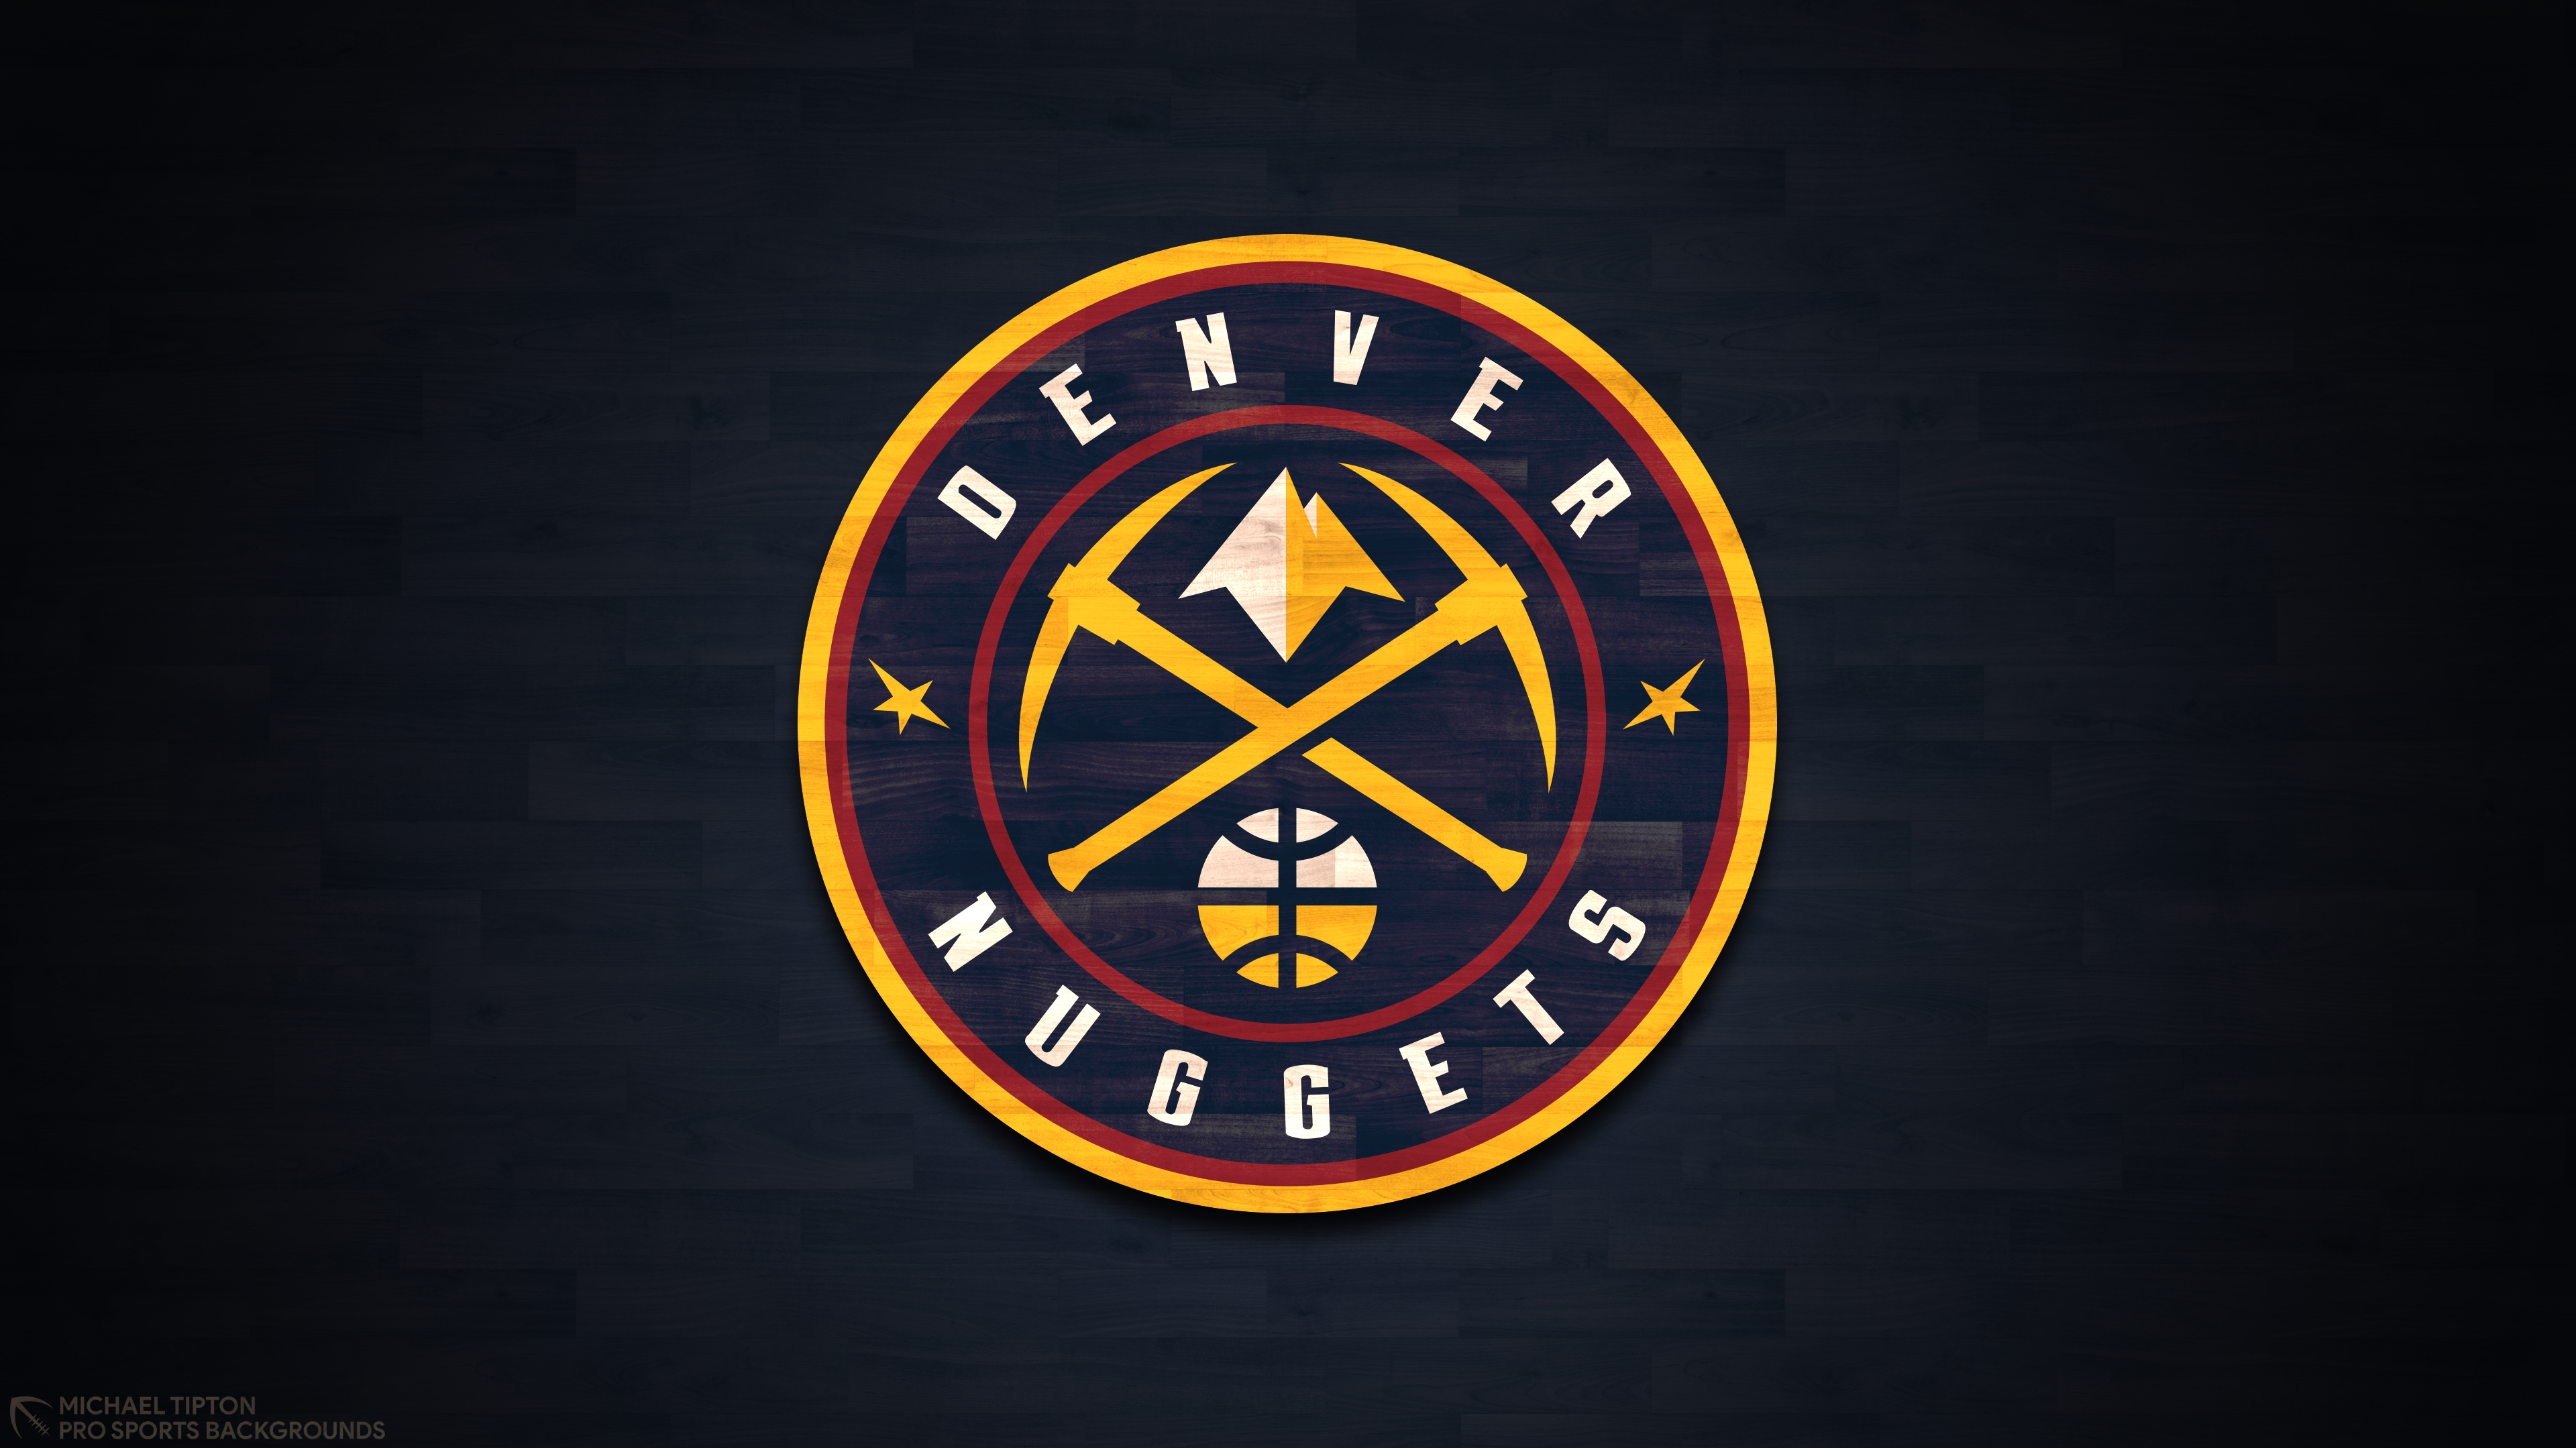 Denver Nuggets 4k Ultra HD Wallpaper By Michael Tipton